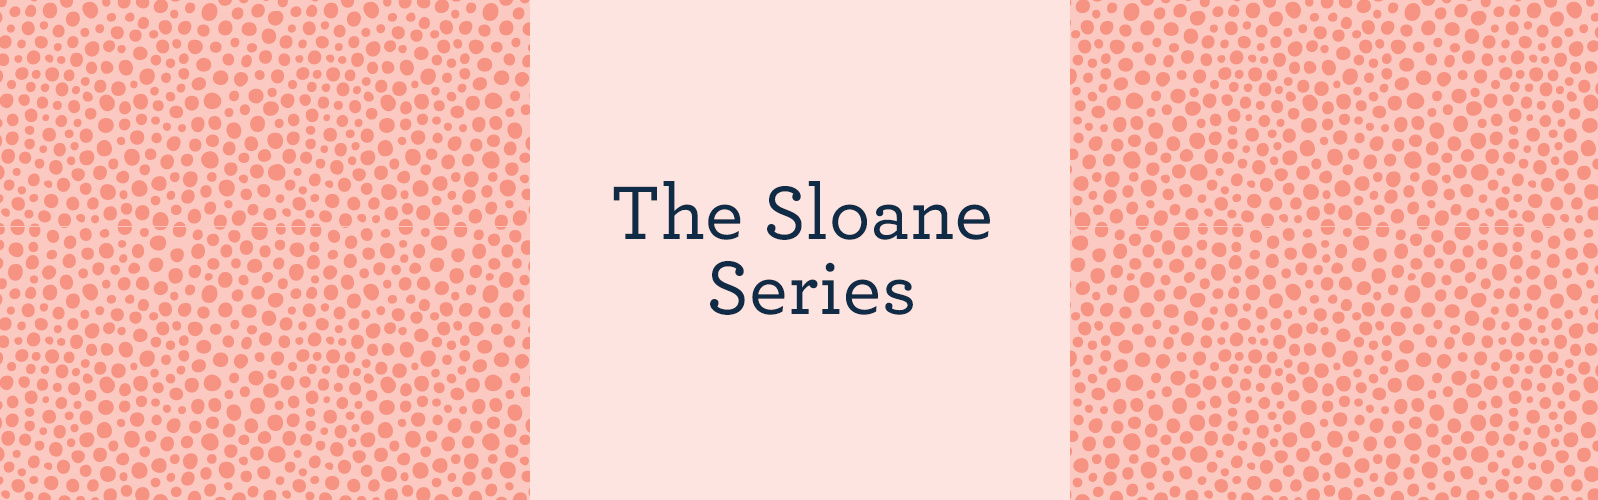 The Sloane Series